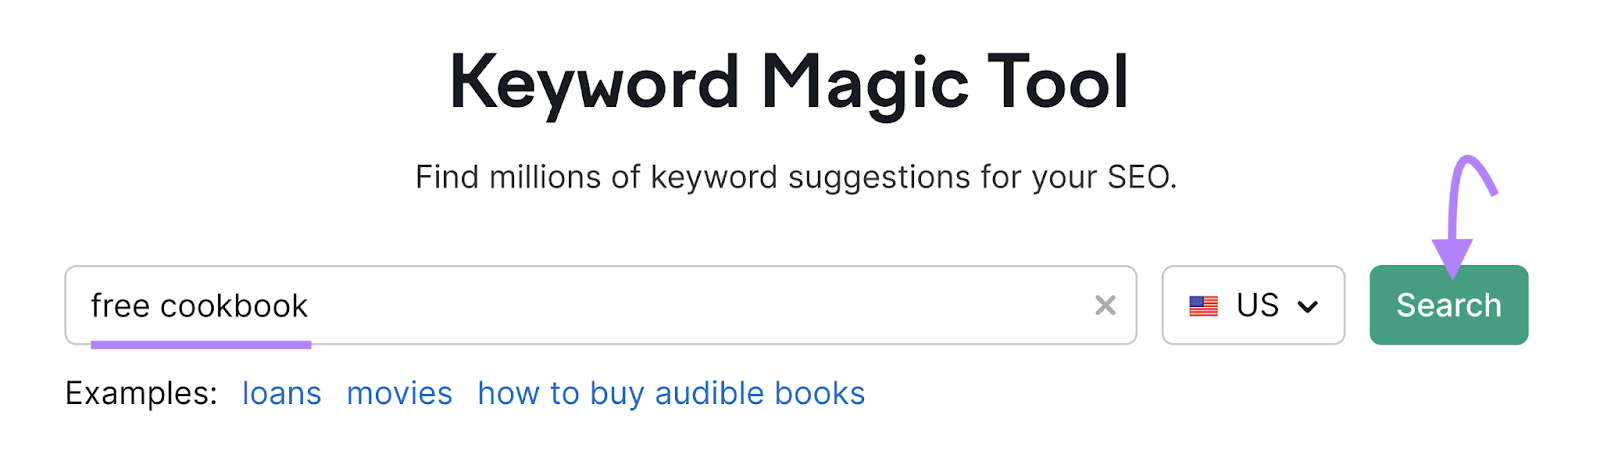 "free cookbook" keyword entered into the Keyword Magic Tool search bar